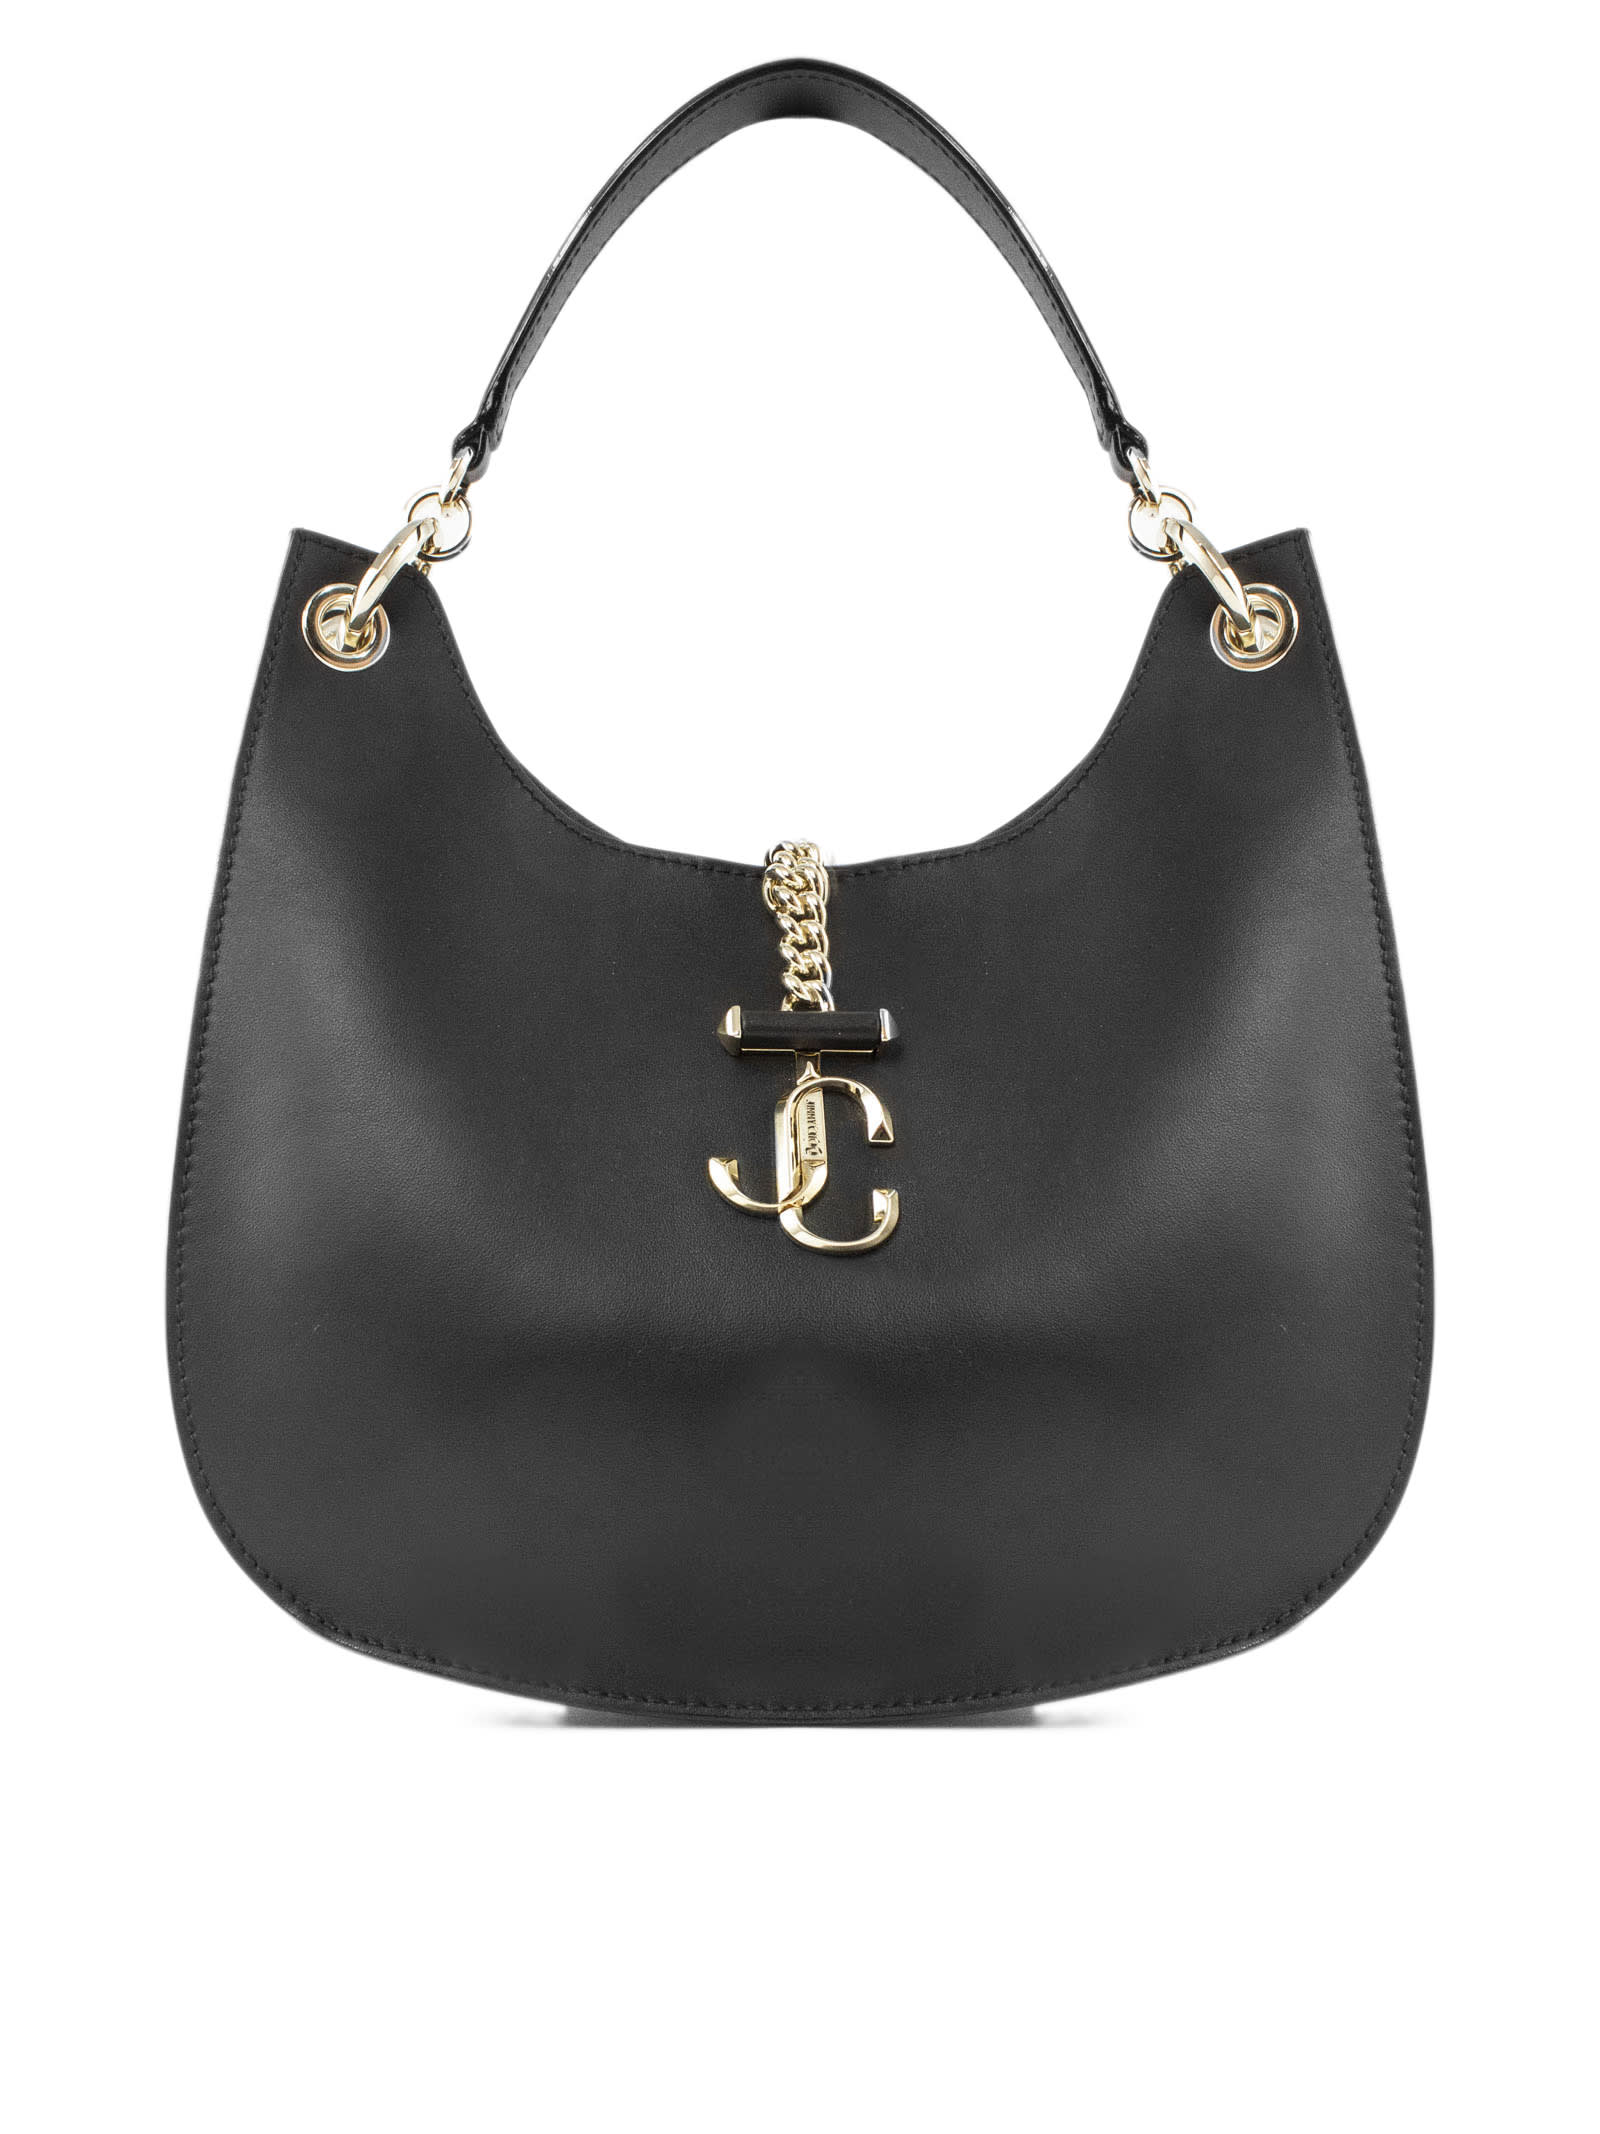 Jimmy Choo Black Calf Leather Handbag